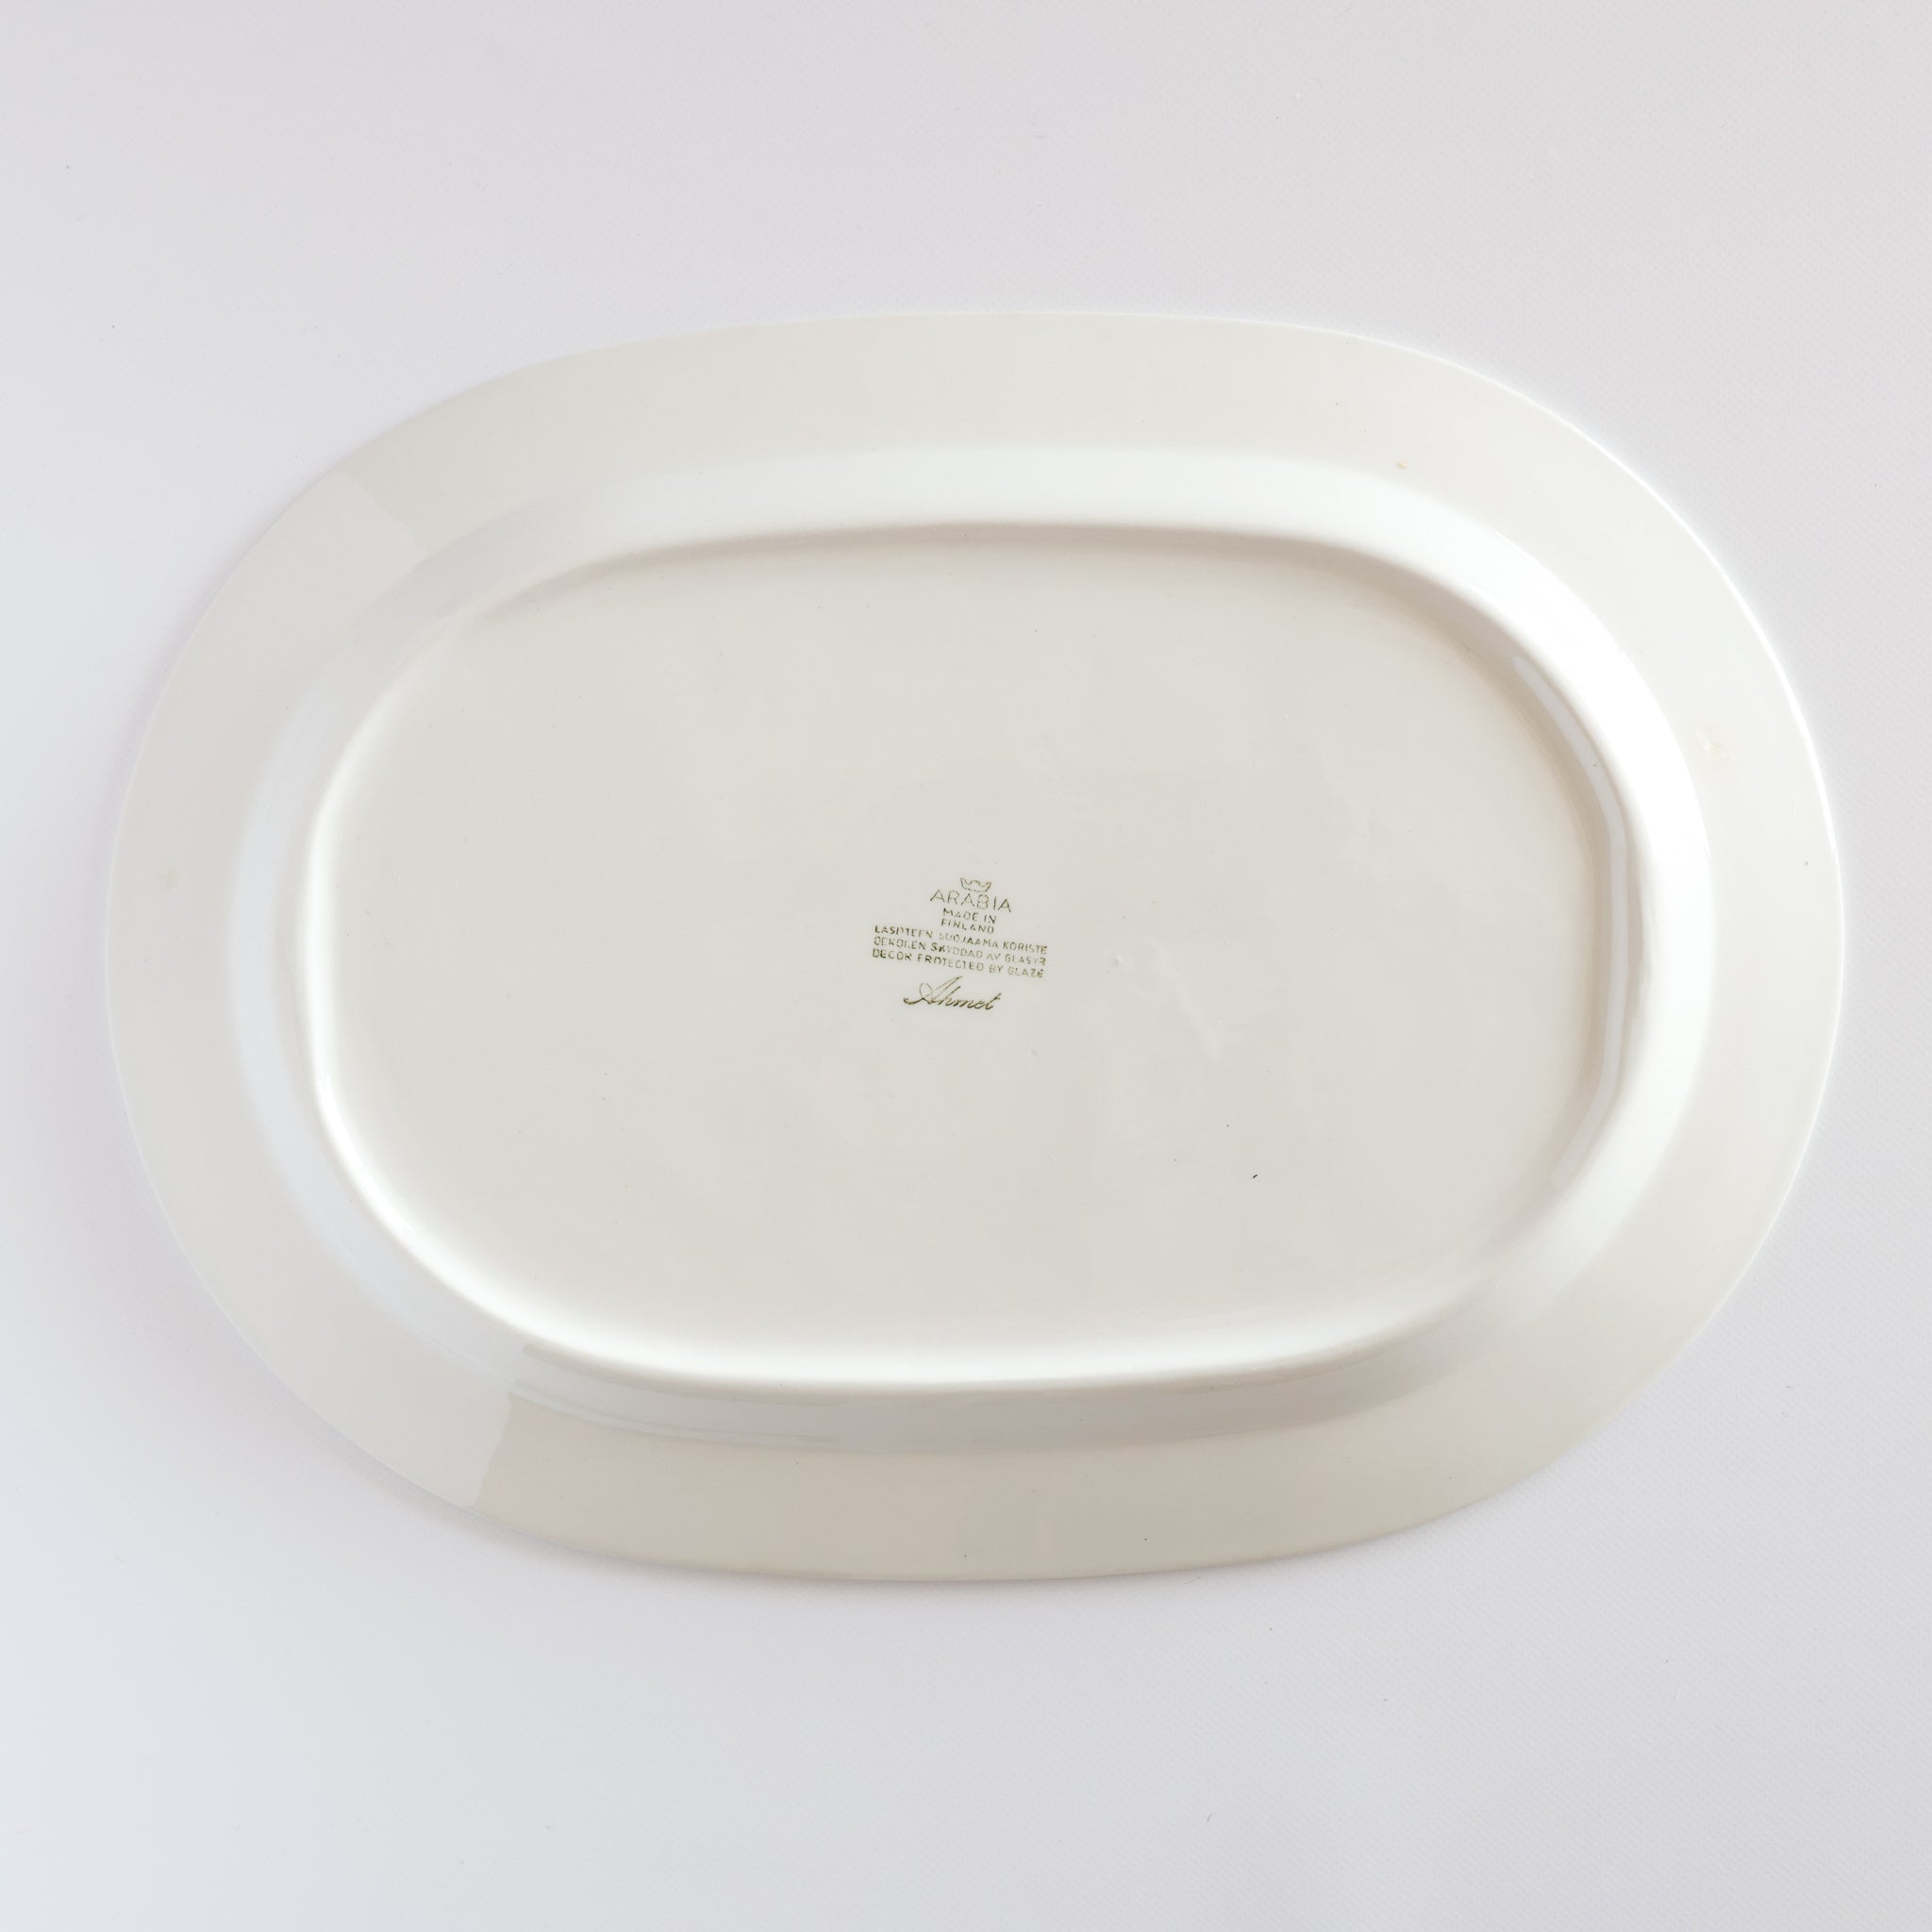 ahmet (アーメット) oval plate 30.5cm / arabia (アラビア)